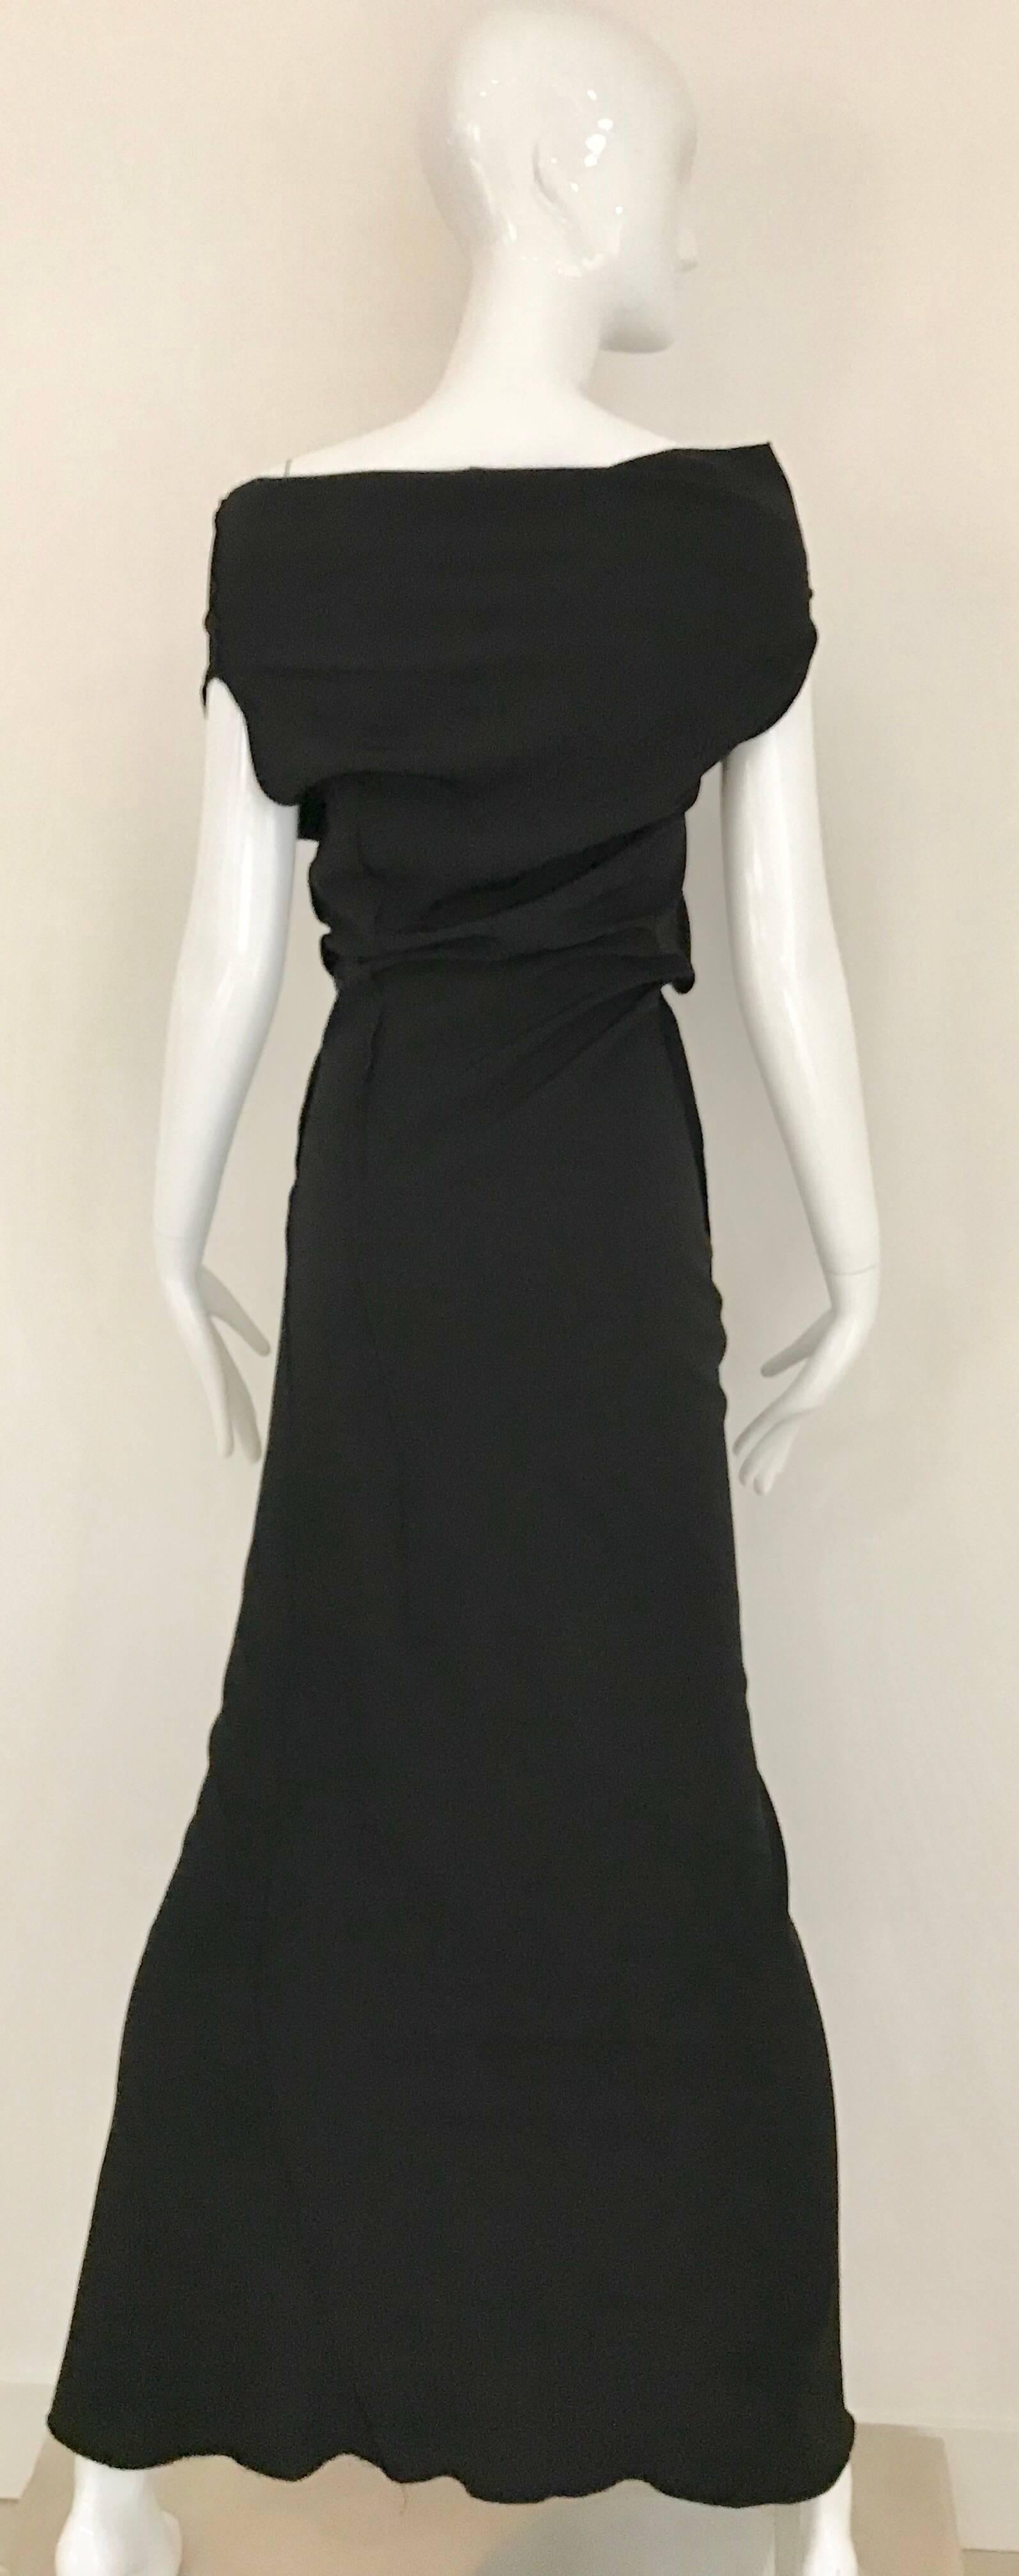 jil sander black dress